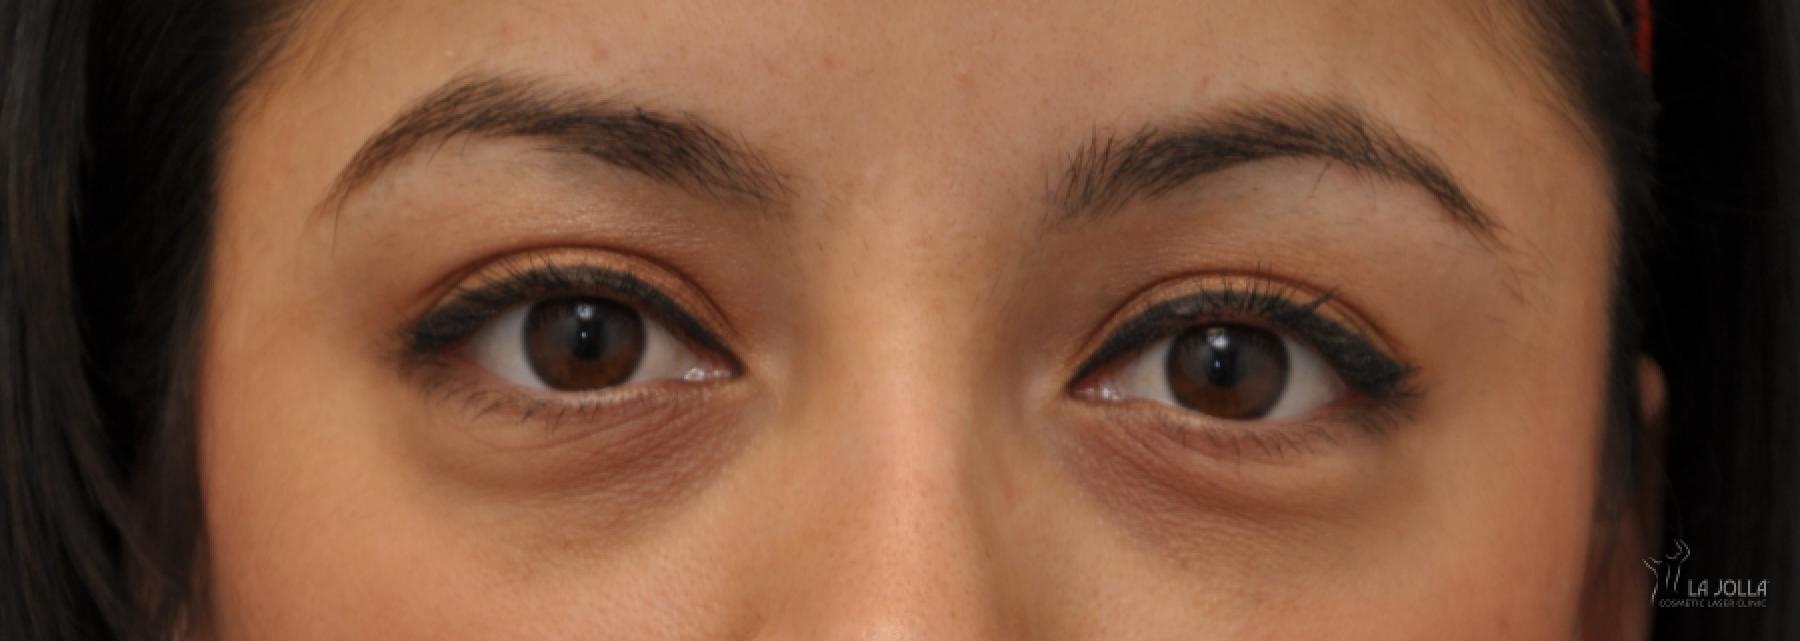 Under Eye Filler: Patient 4 - Before 